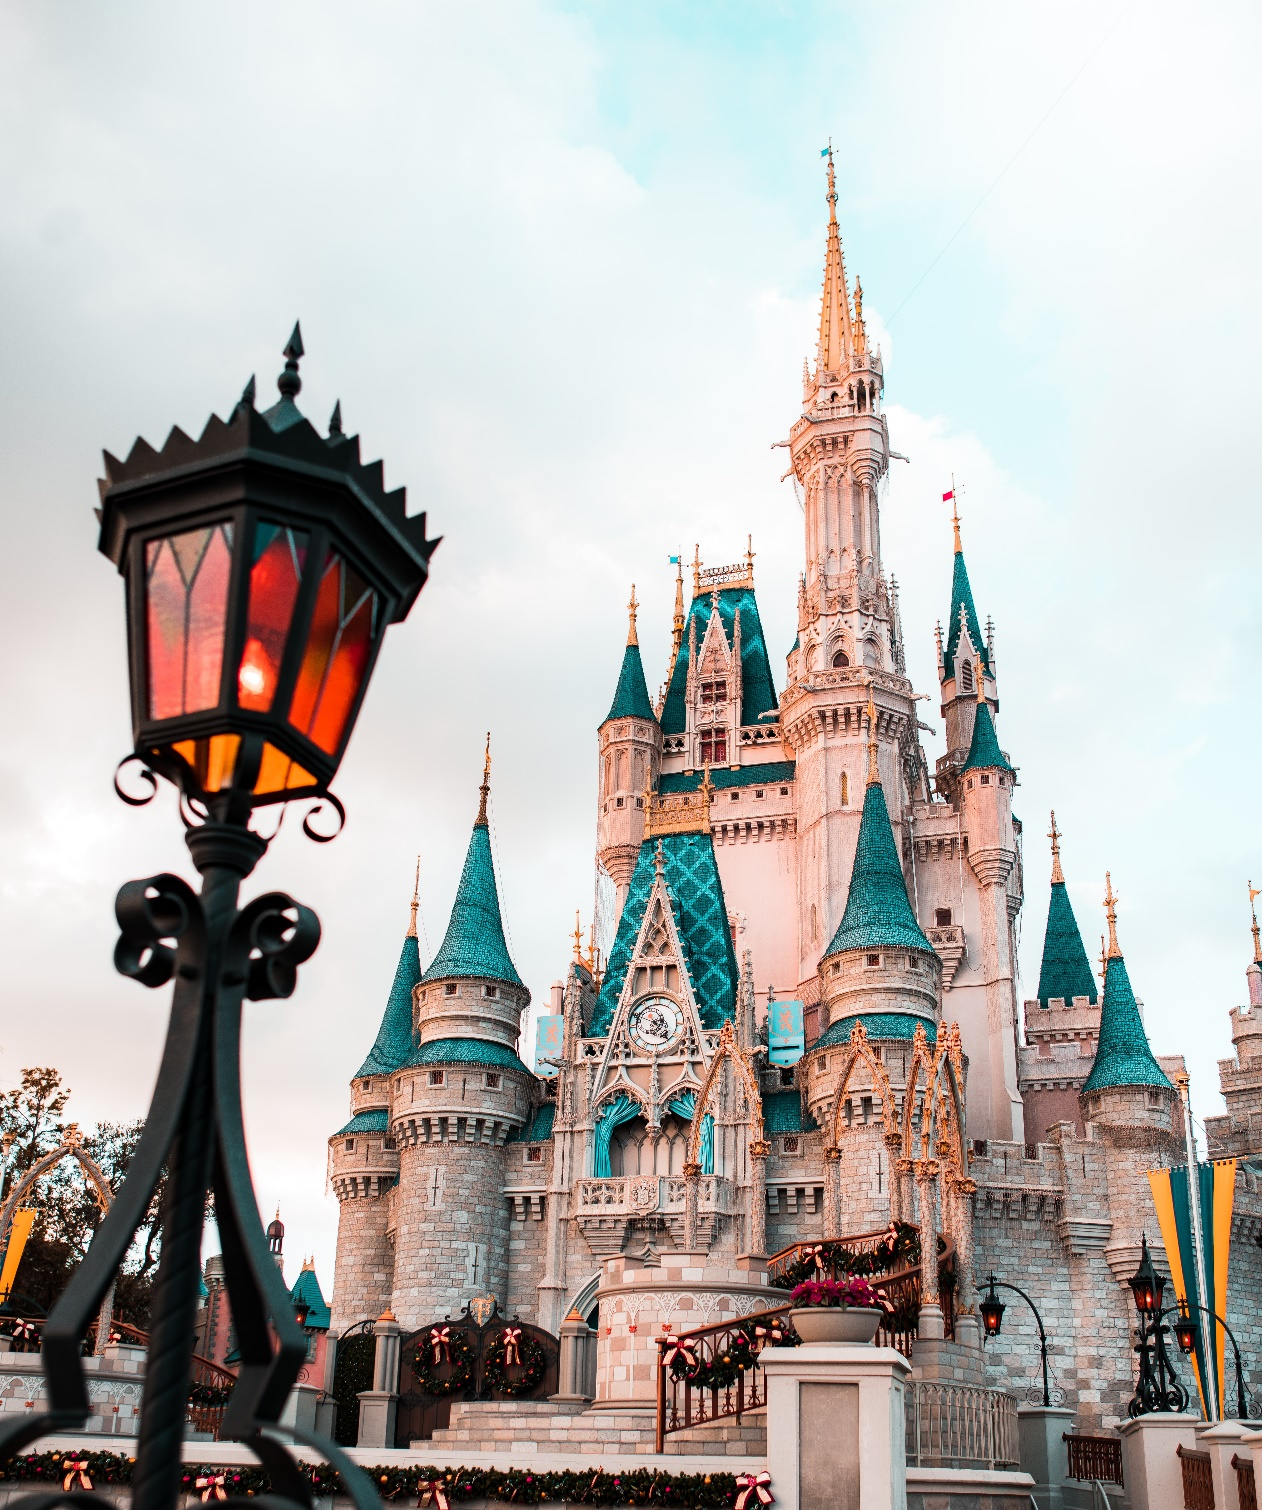 Disney World in Orlando, Florida